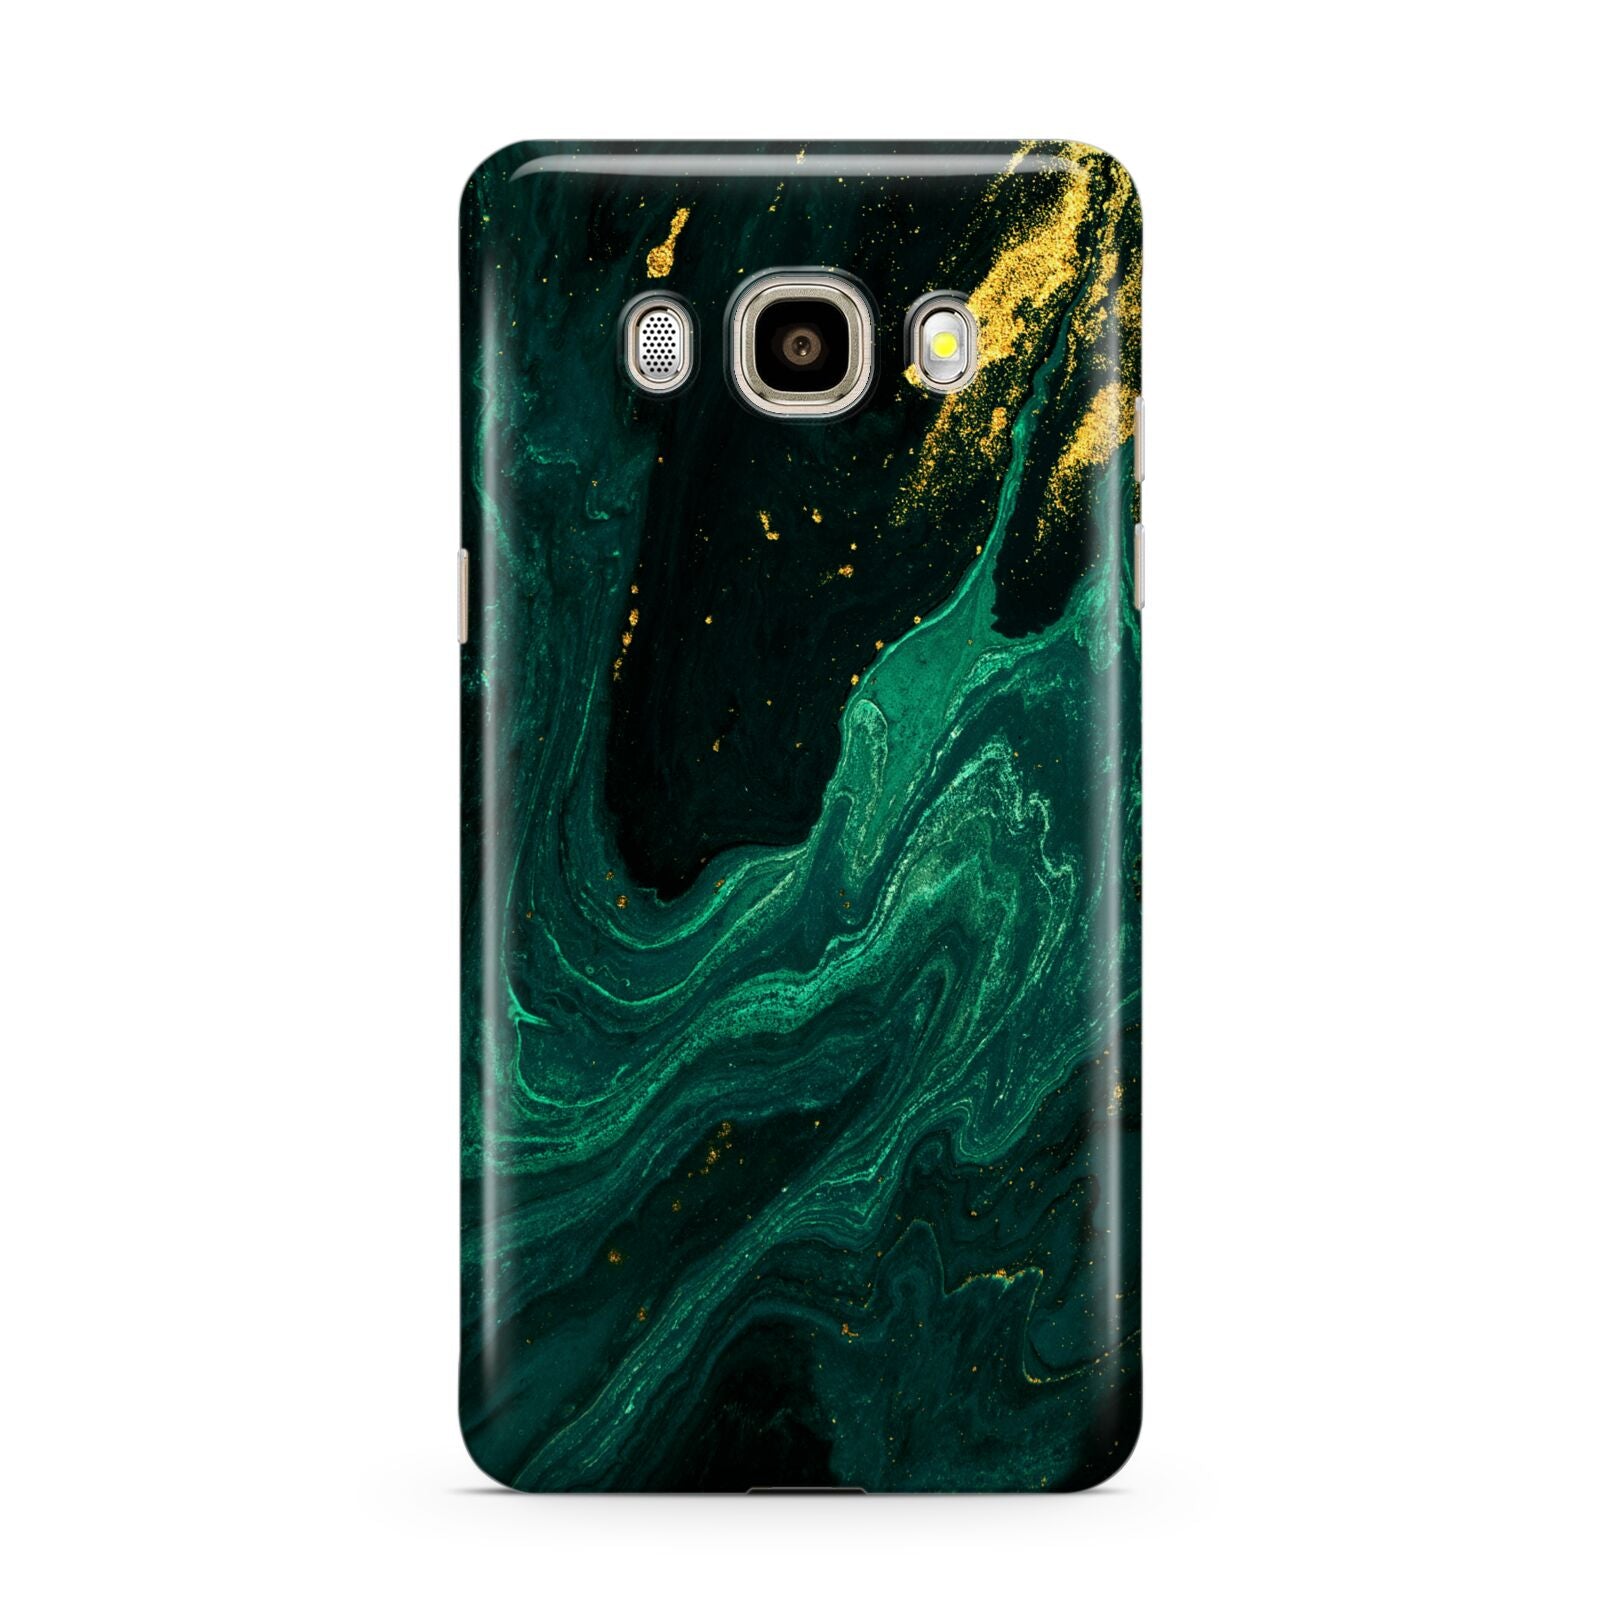 Emerald Green Samsung Galaxy J7 2016 Case on gold phone